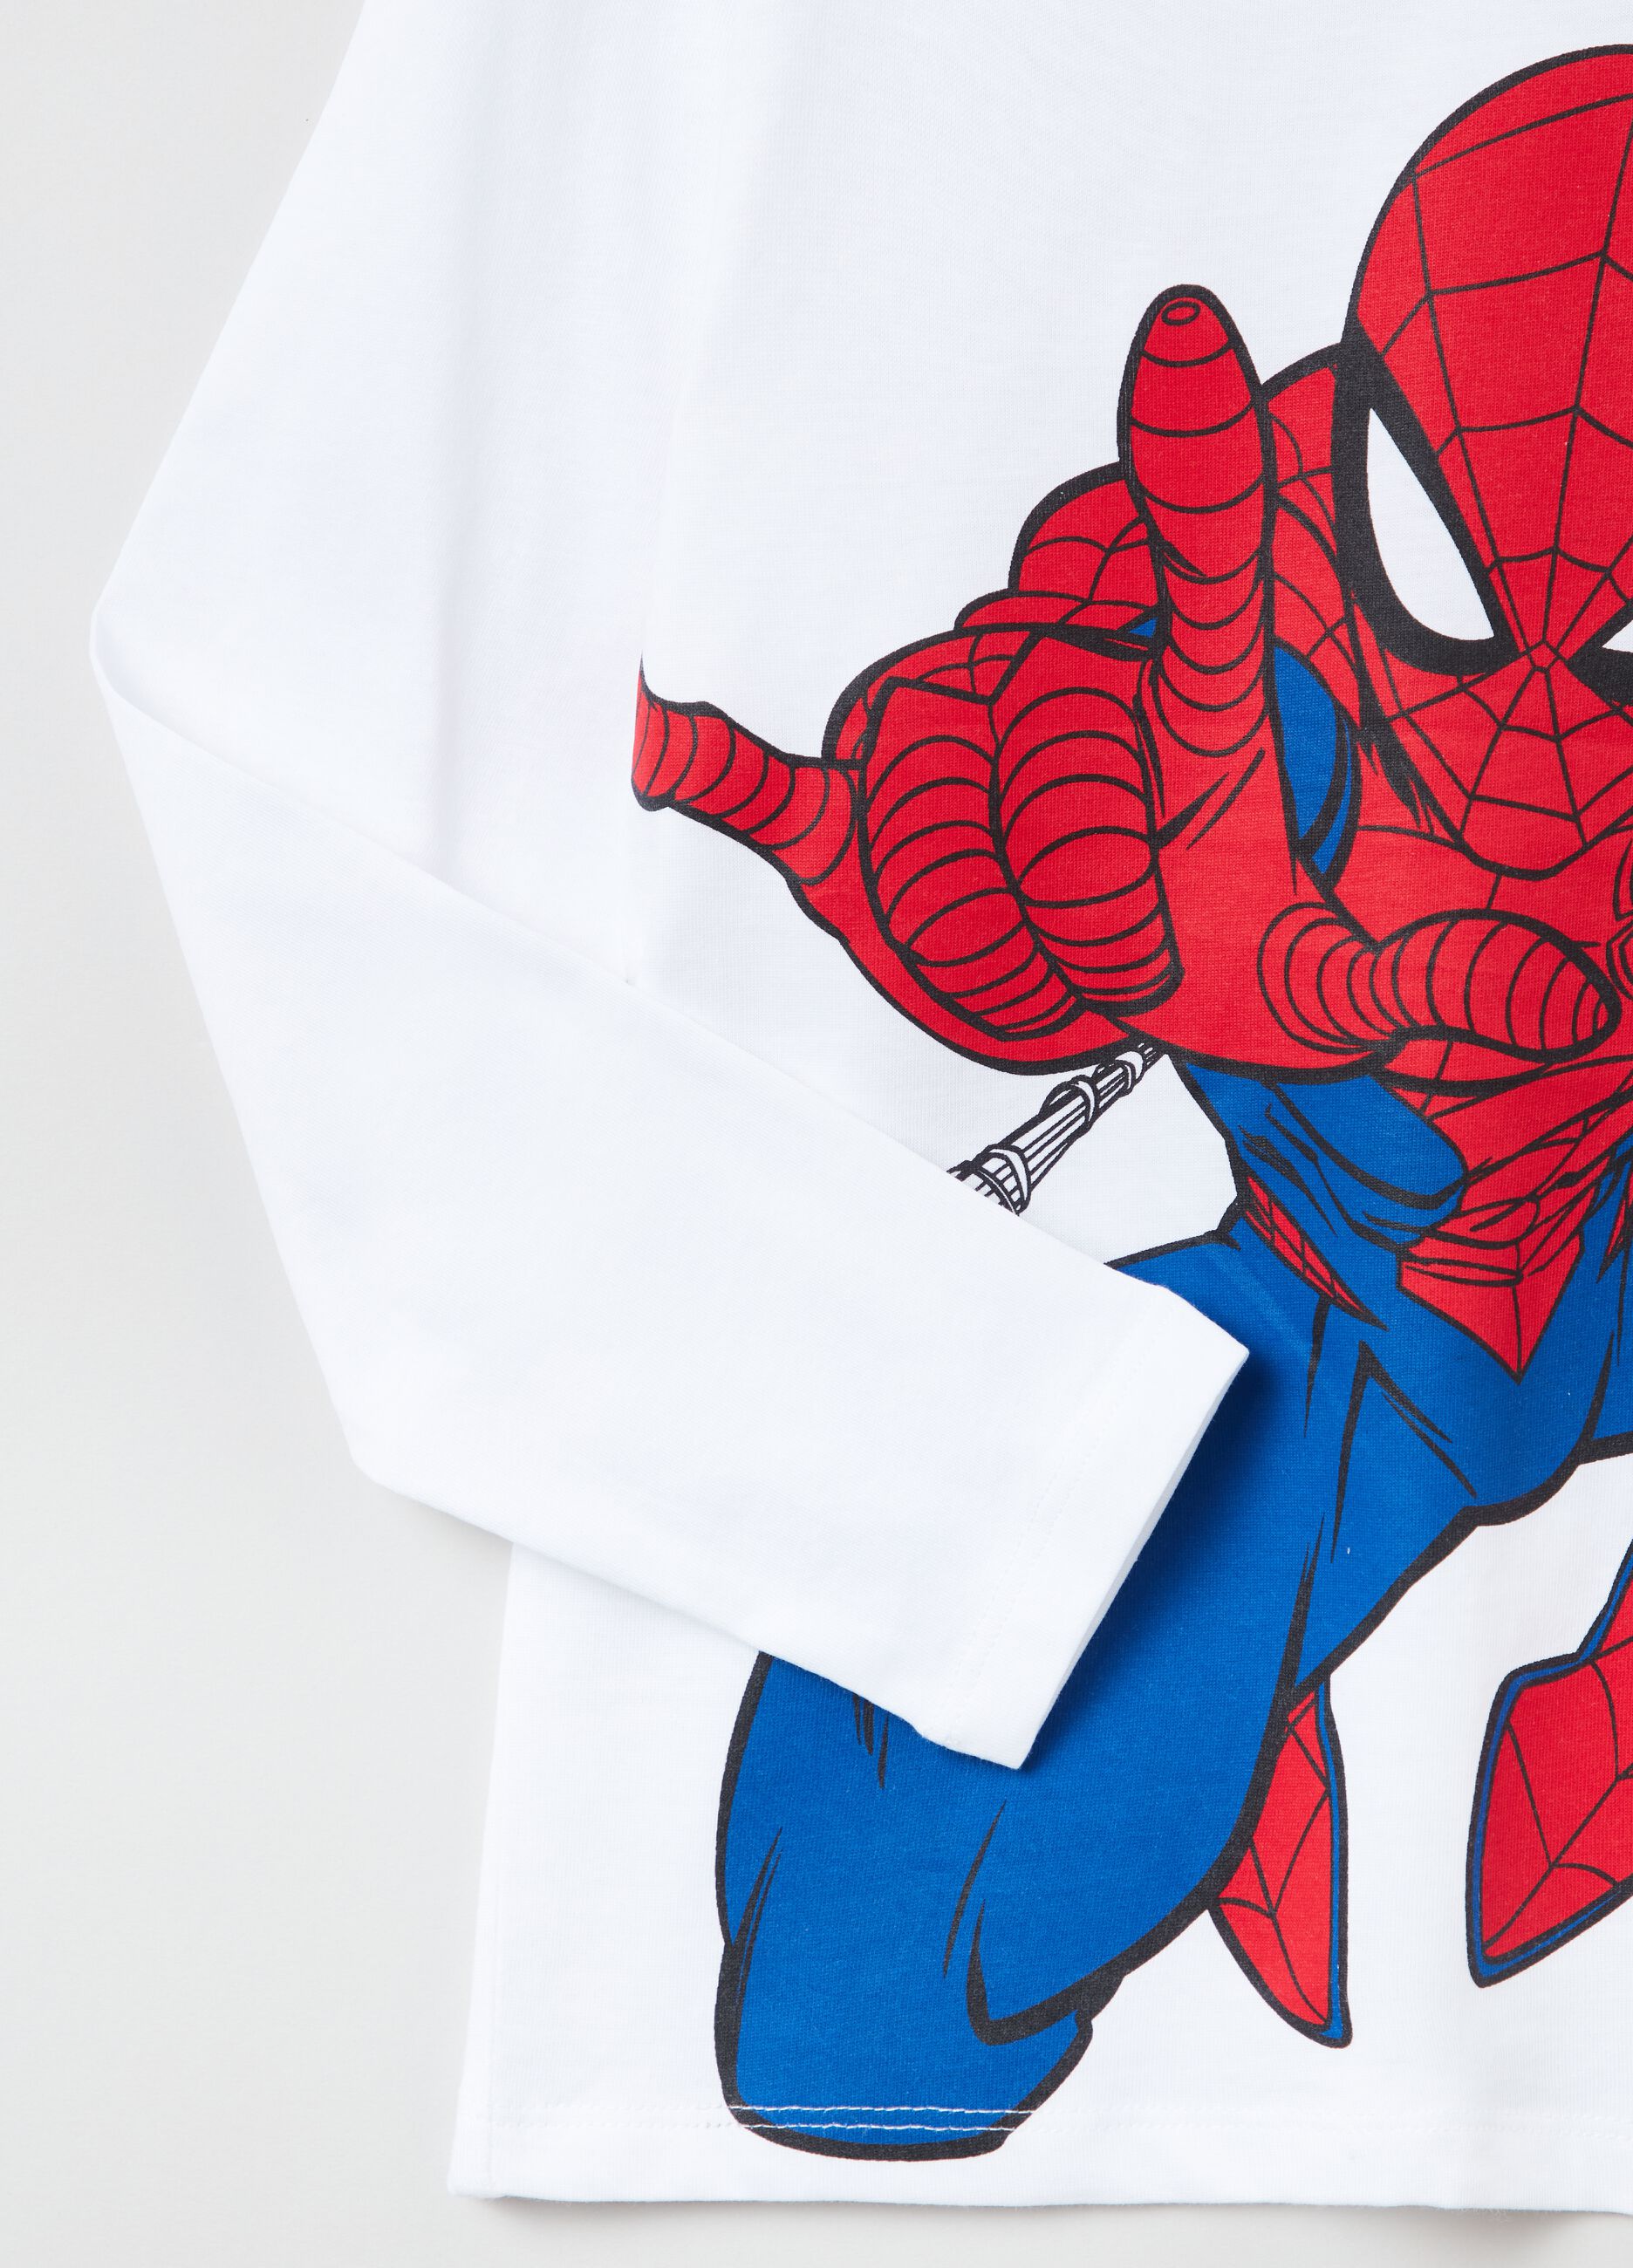 Camiseta de manga larga estampado Spider-Man